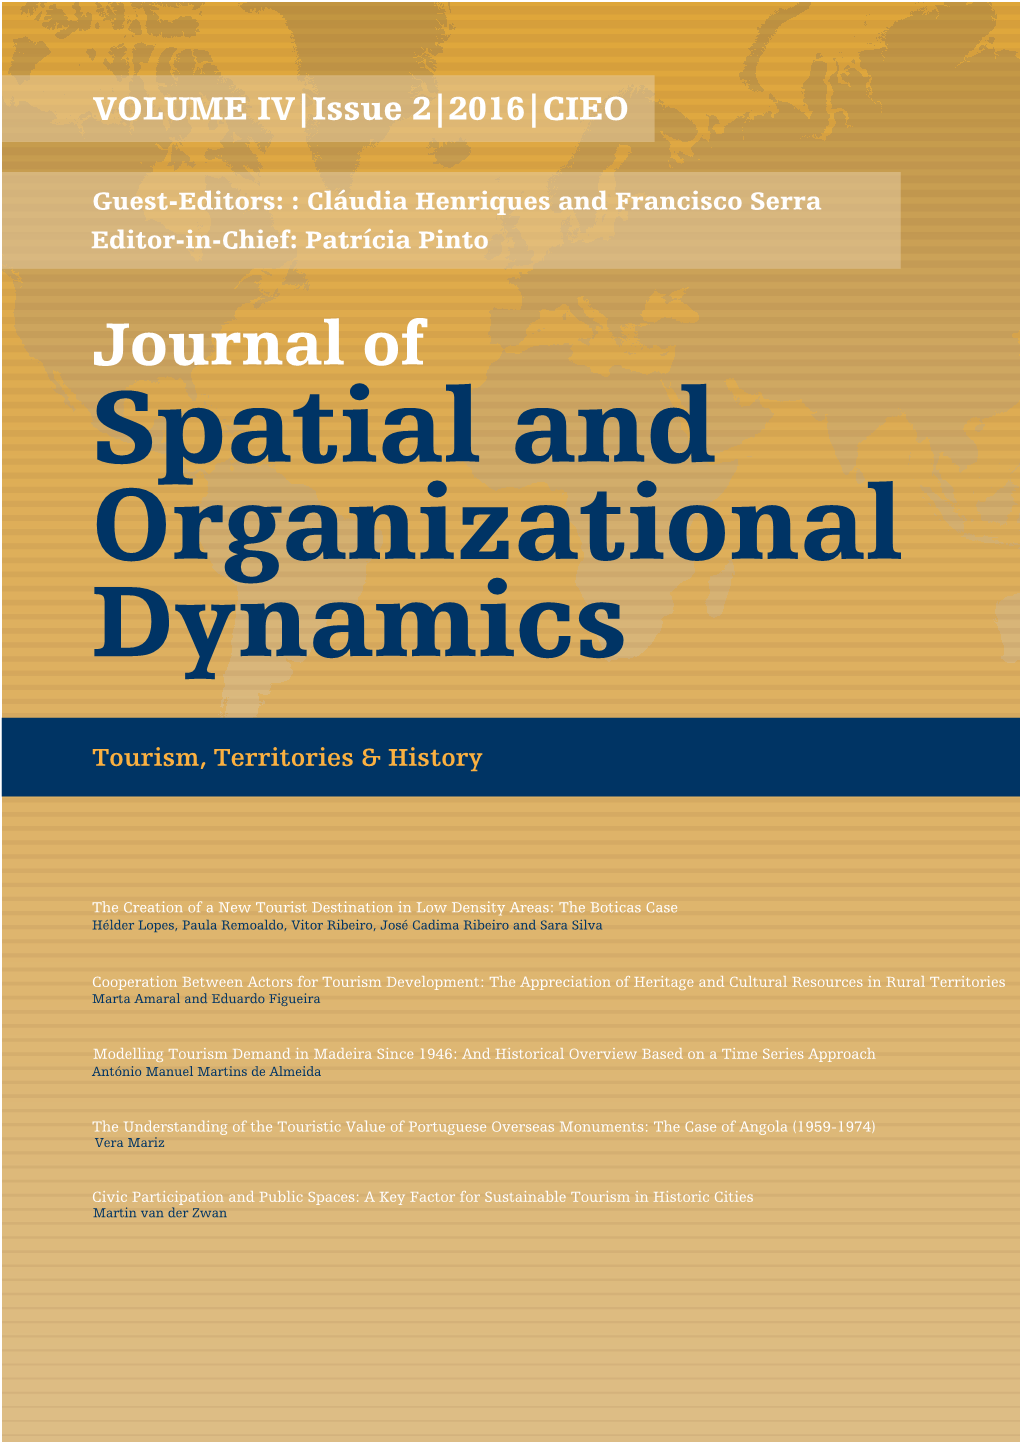 Spatial and Organizational Dynamics